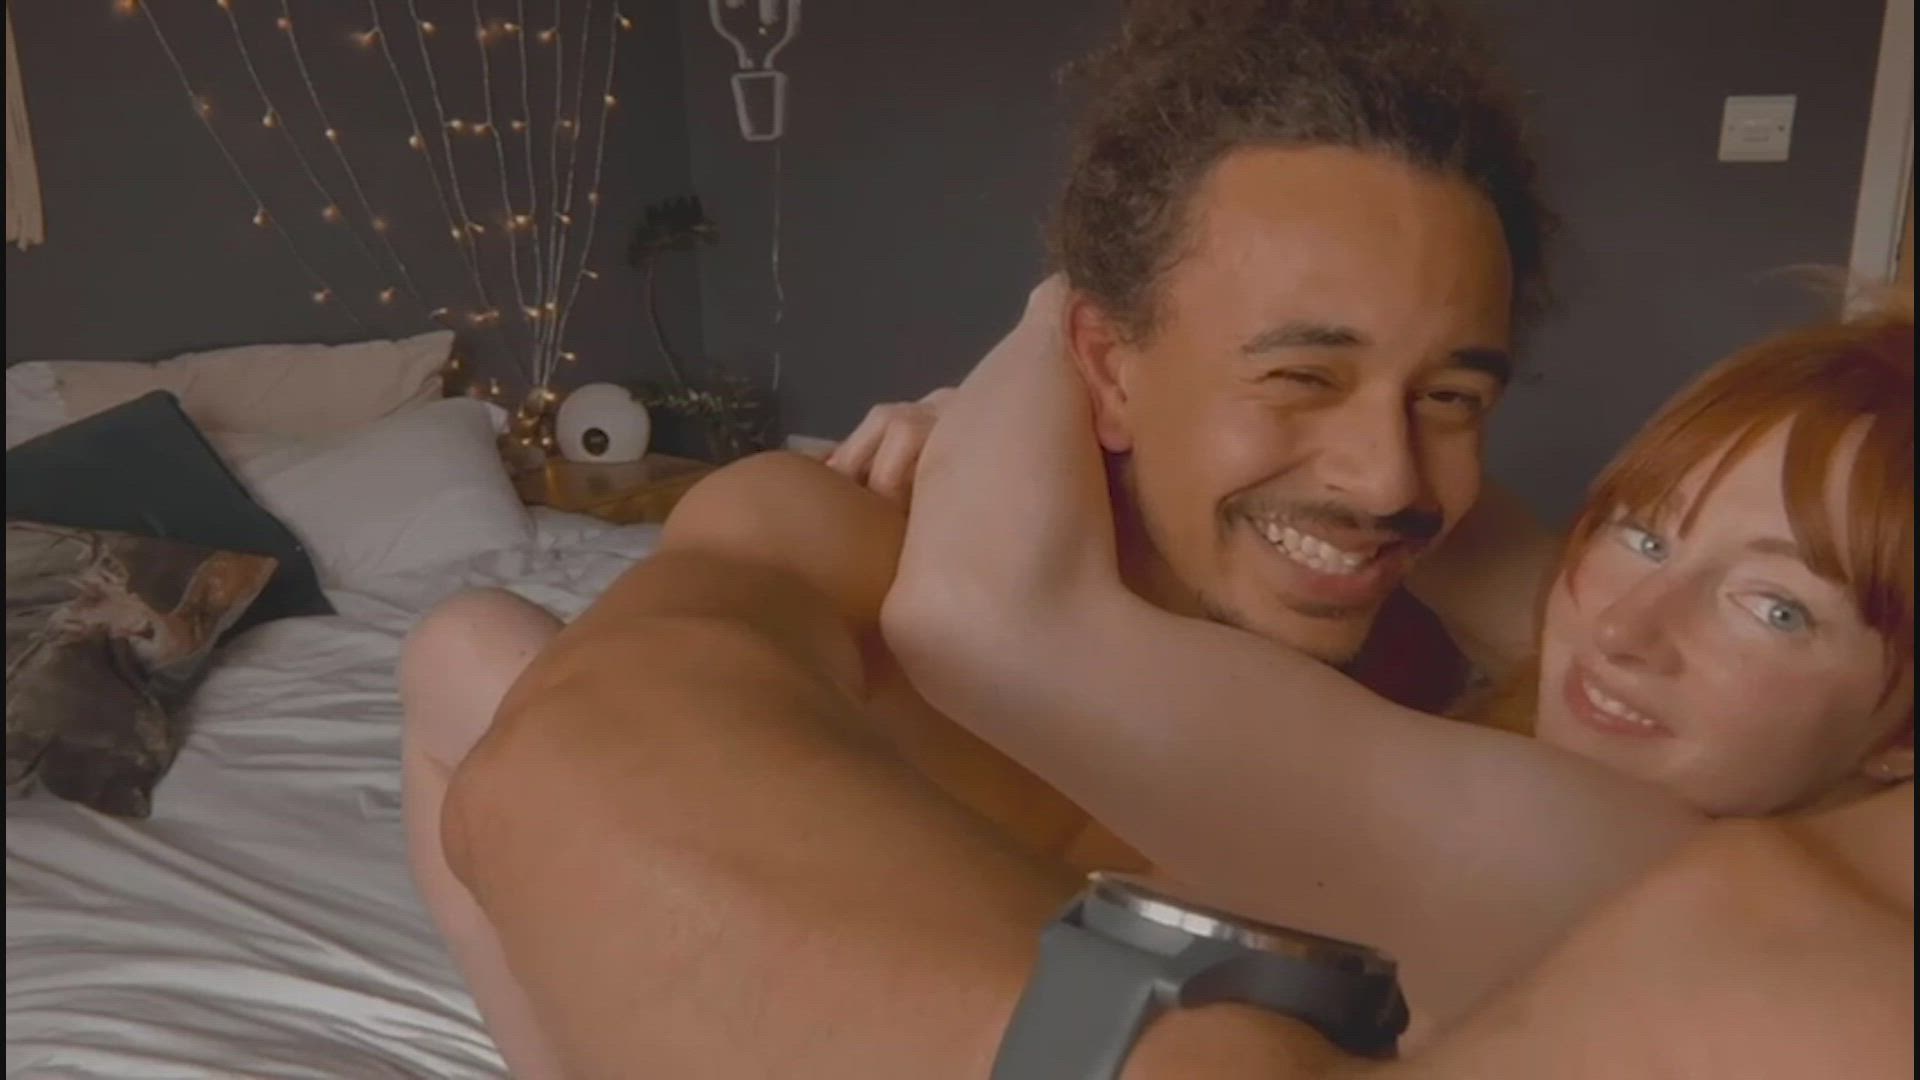 Bareback porn video with onlyfans model lovedaymarley <strong>@lovedaypole</strong>